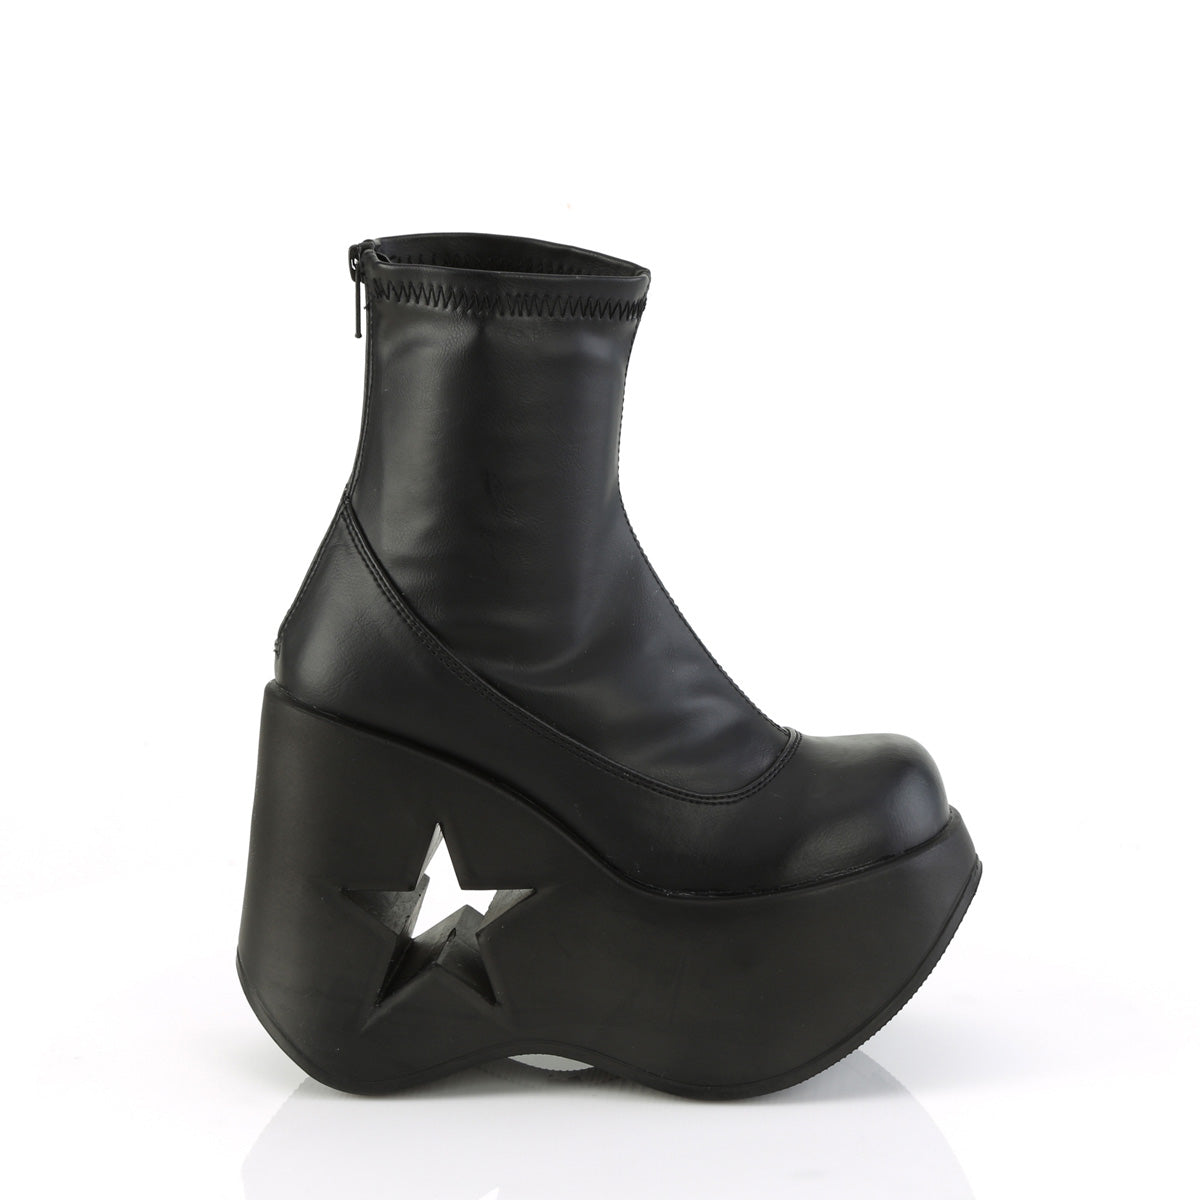 DYNAMITE-100 Demonia Black Stretch Vegan Leather Women's Ankle Boots [Demonia Cult Alternative Footwear]